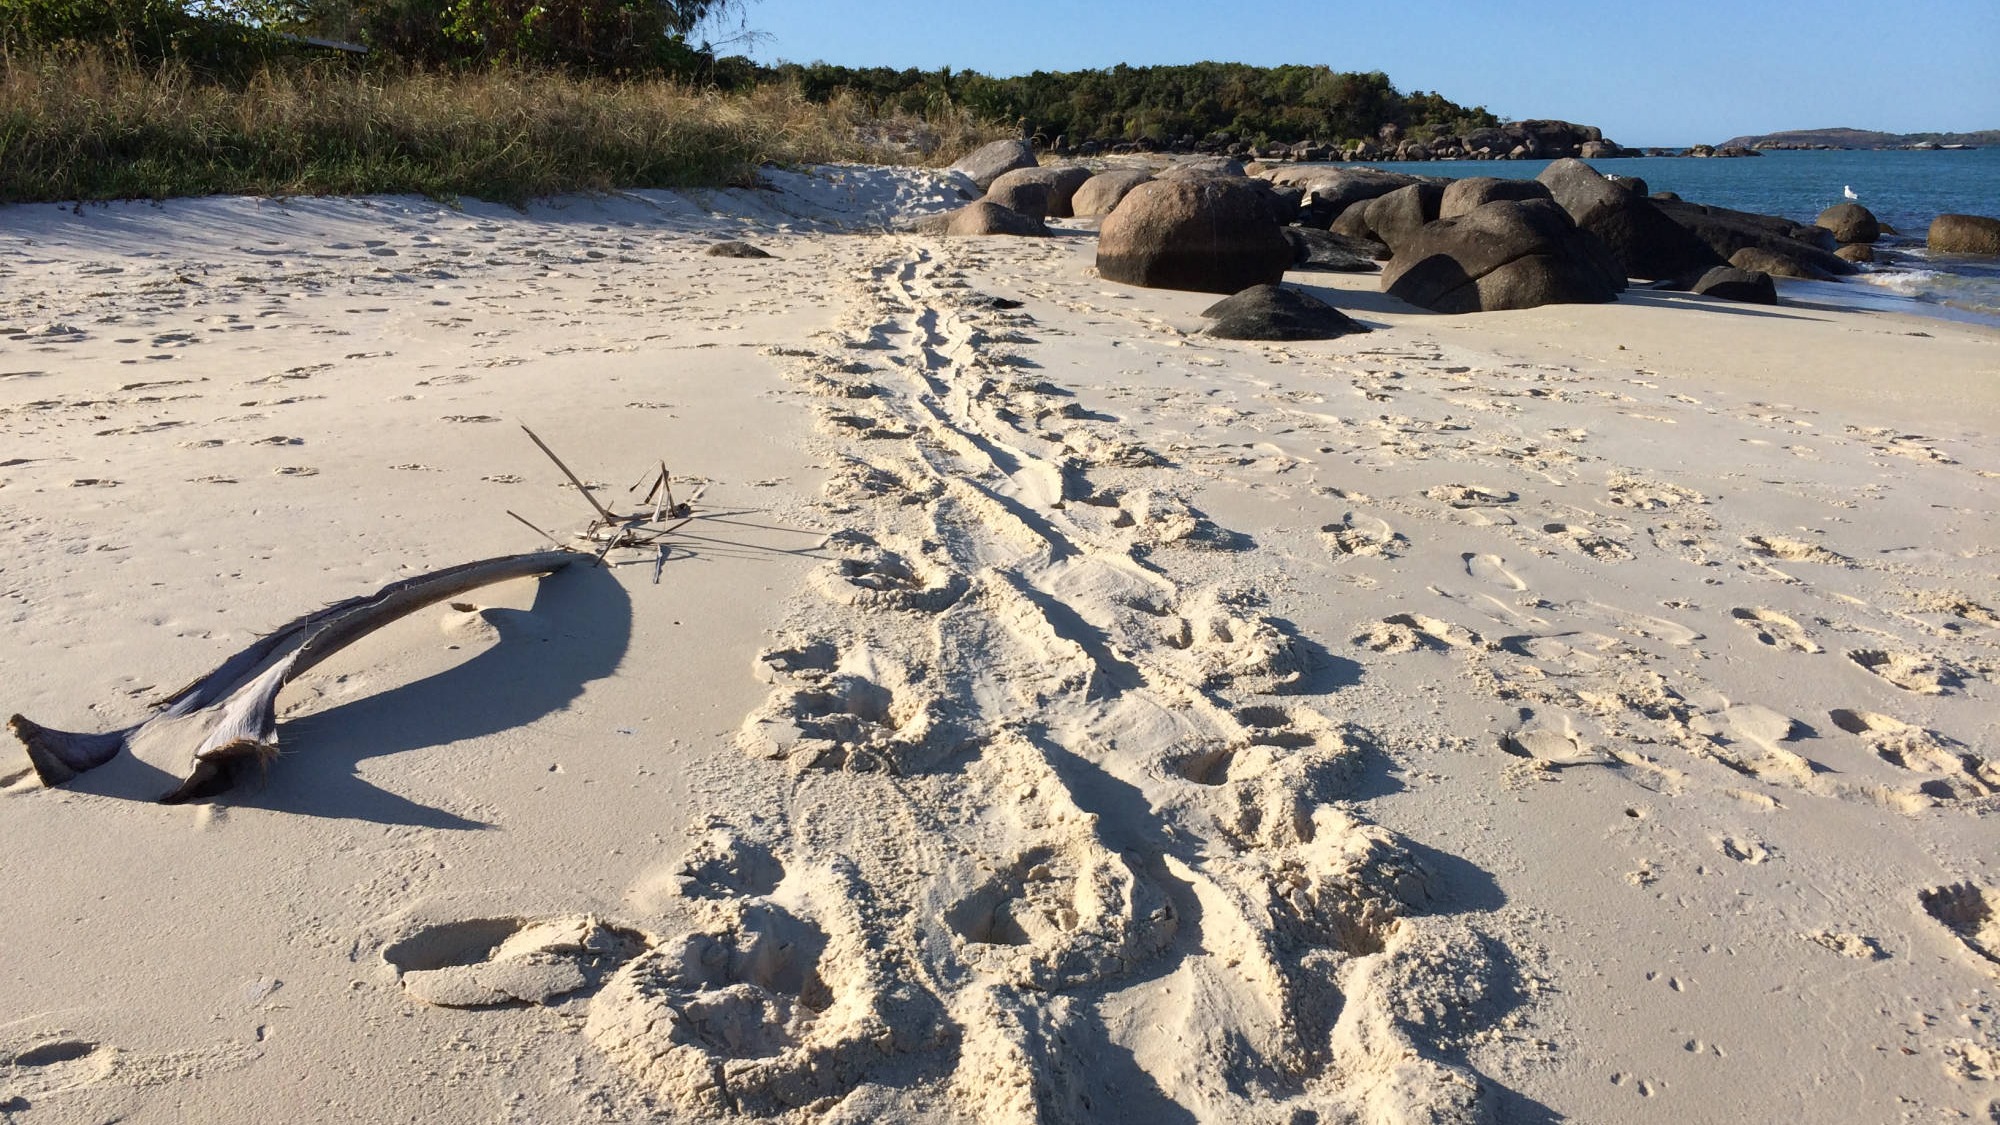 Crocodile tracks in the sand